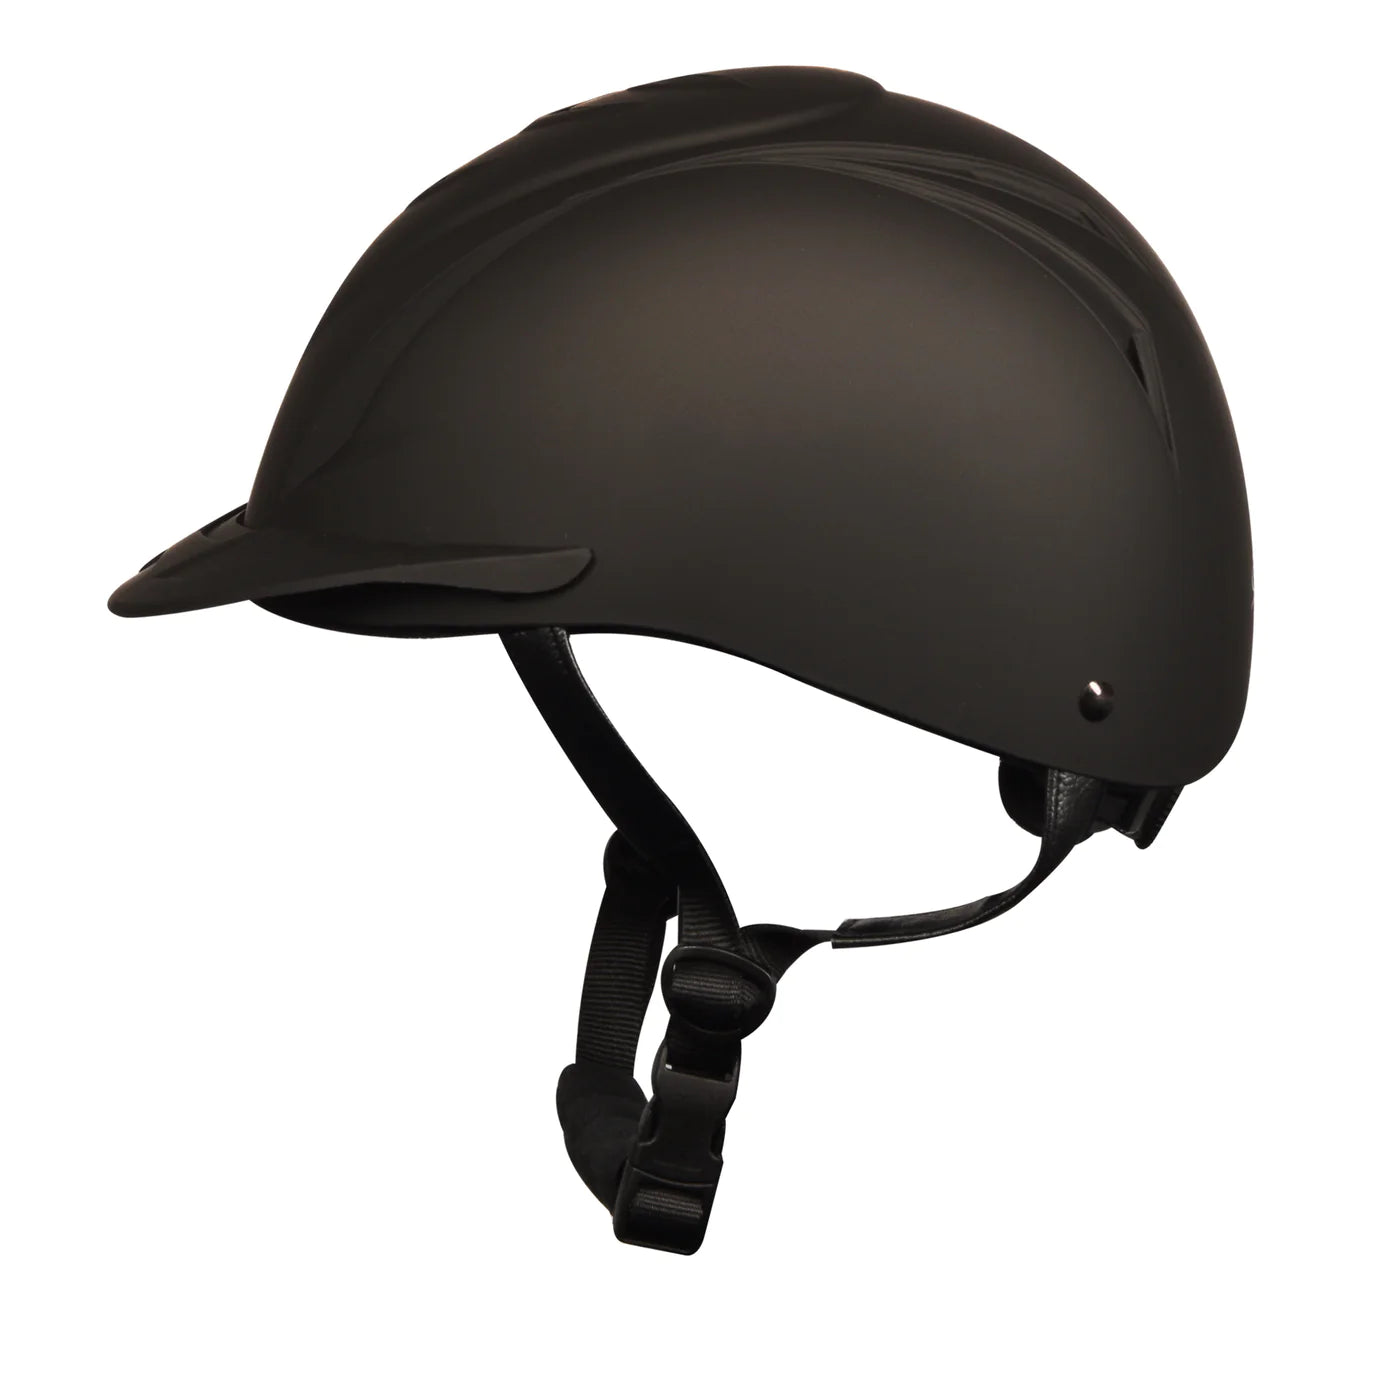 Ovation Deluxe Schooler Helmet | The Horse Connection - The Horse